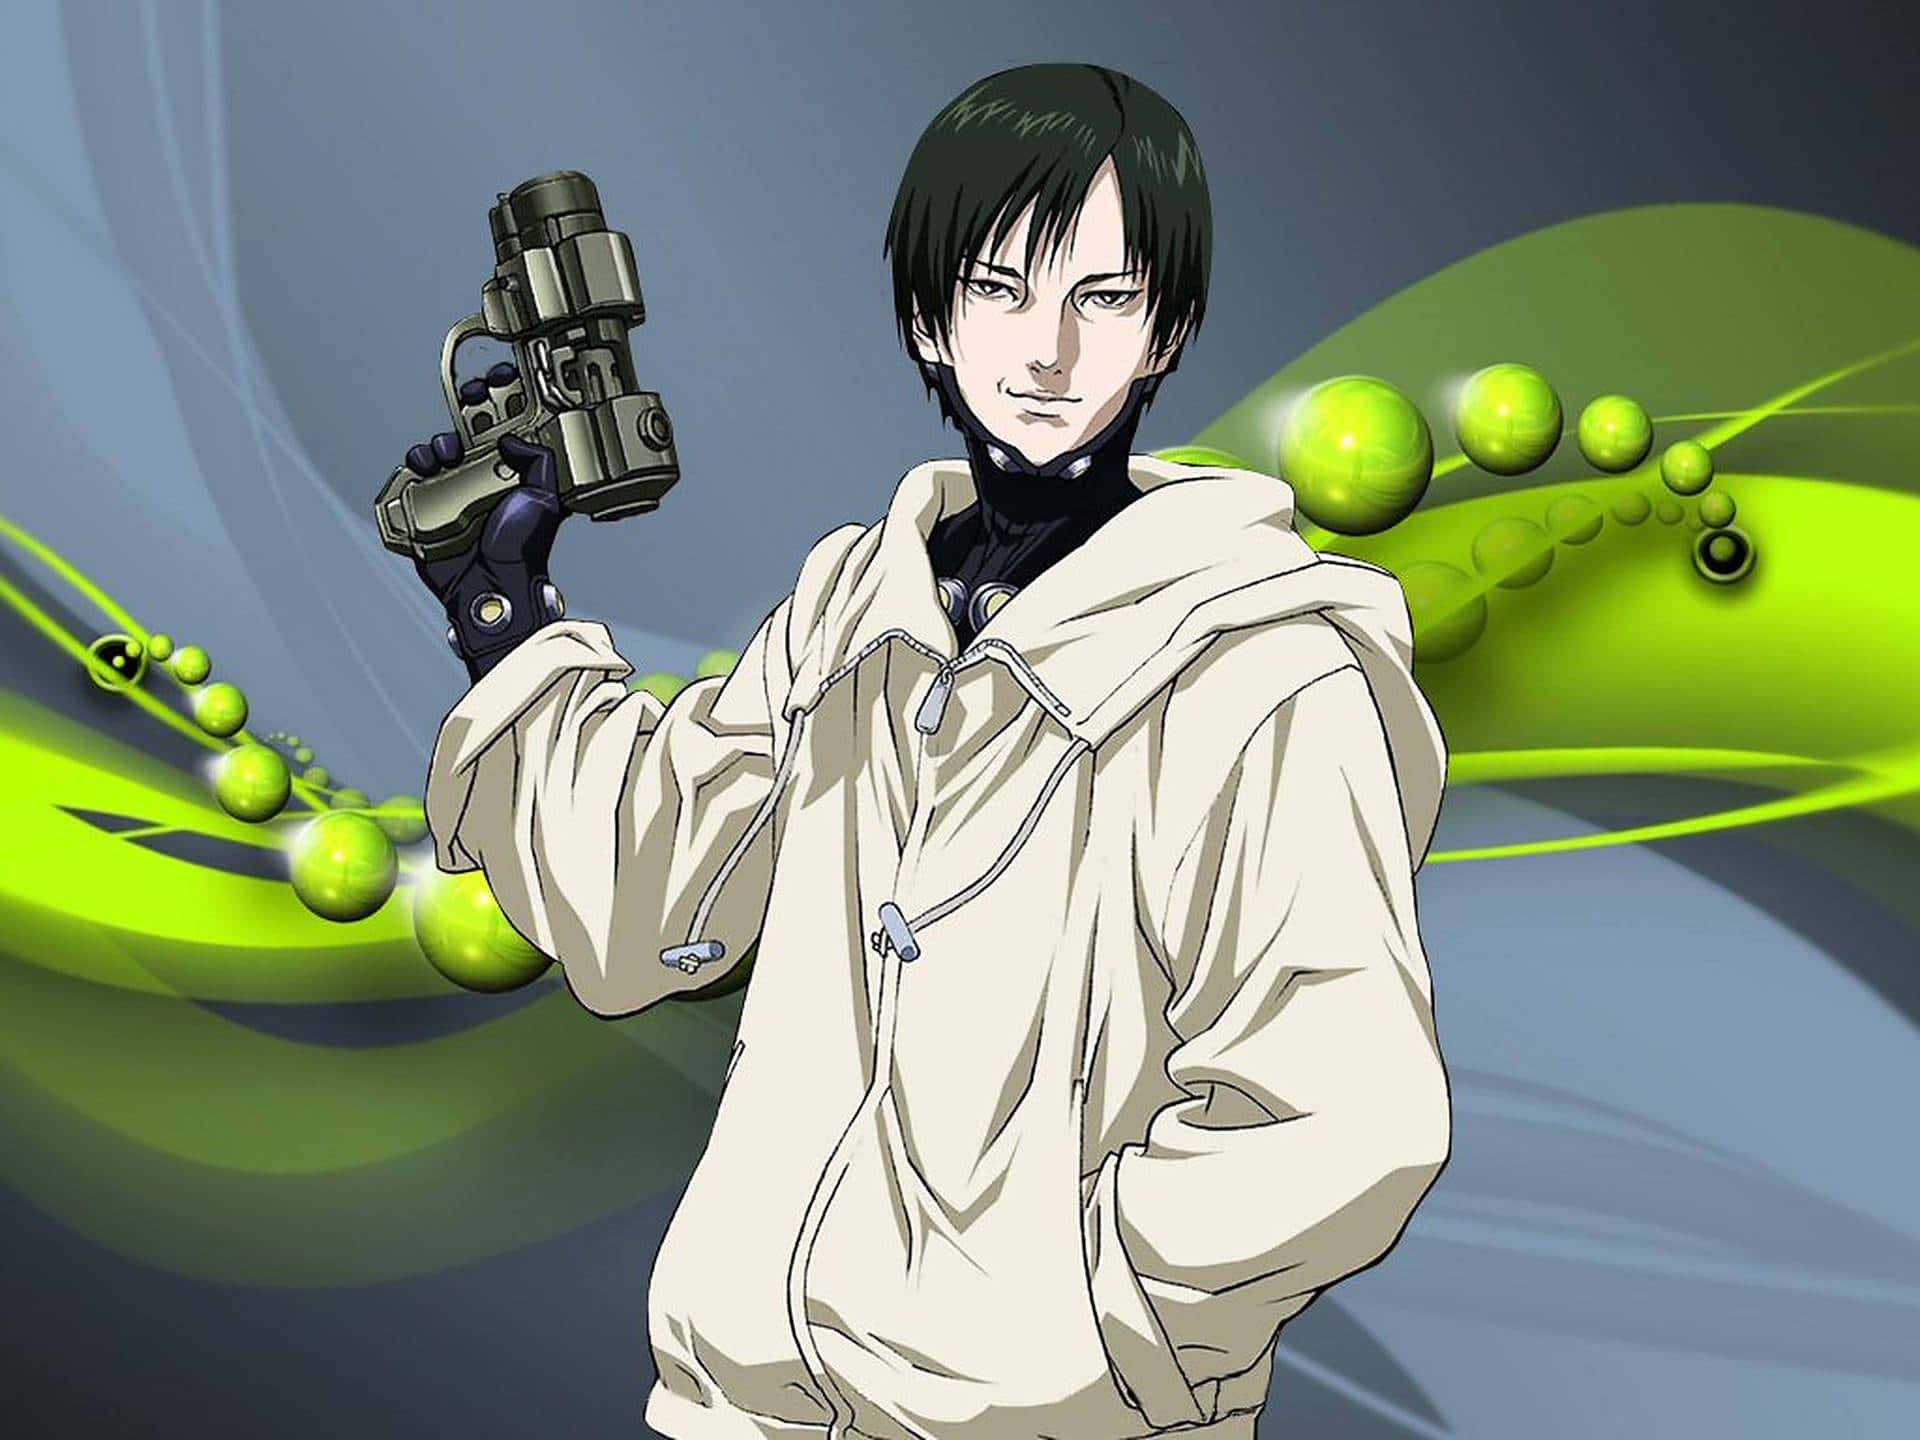 Anime Characterwith Gunand Green Energy Balls Wallpaper